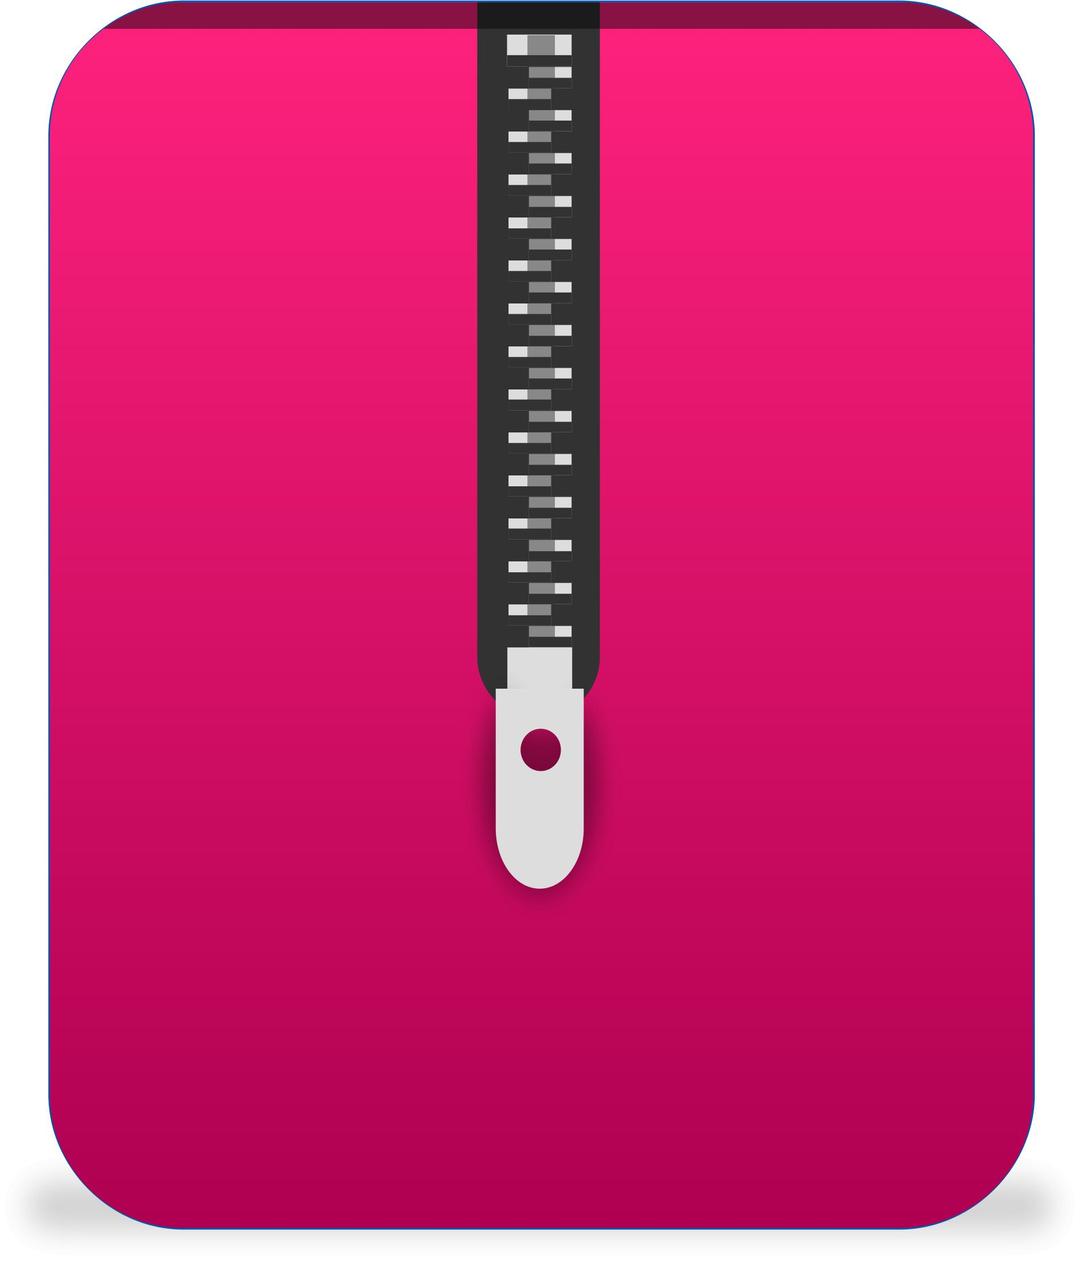 matt-icons-archive-pink png transparent